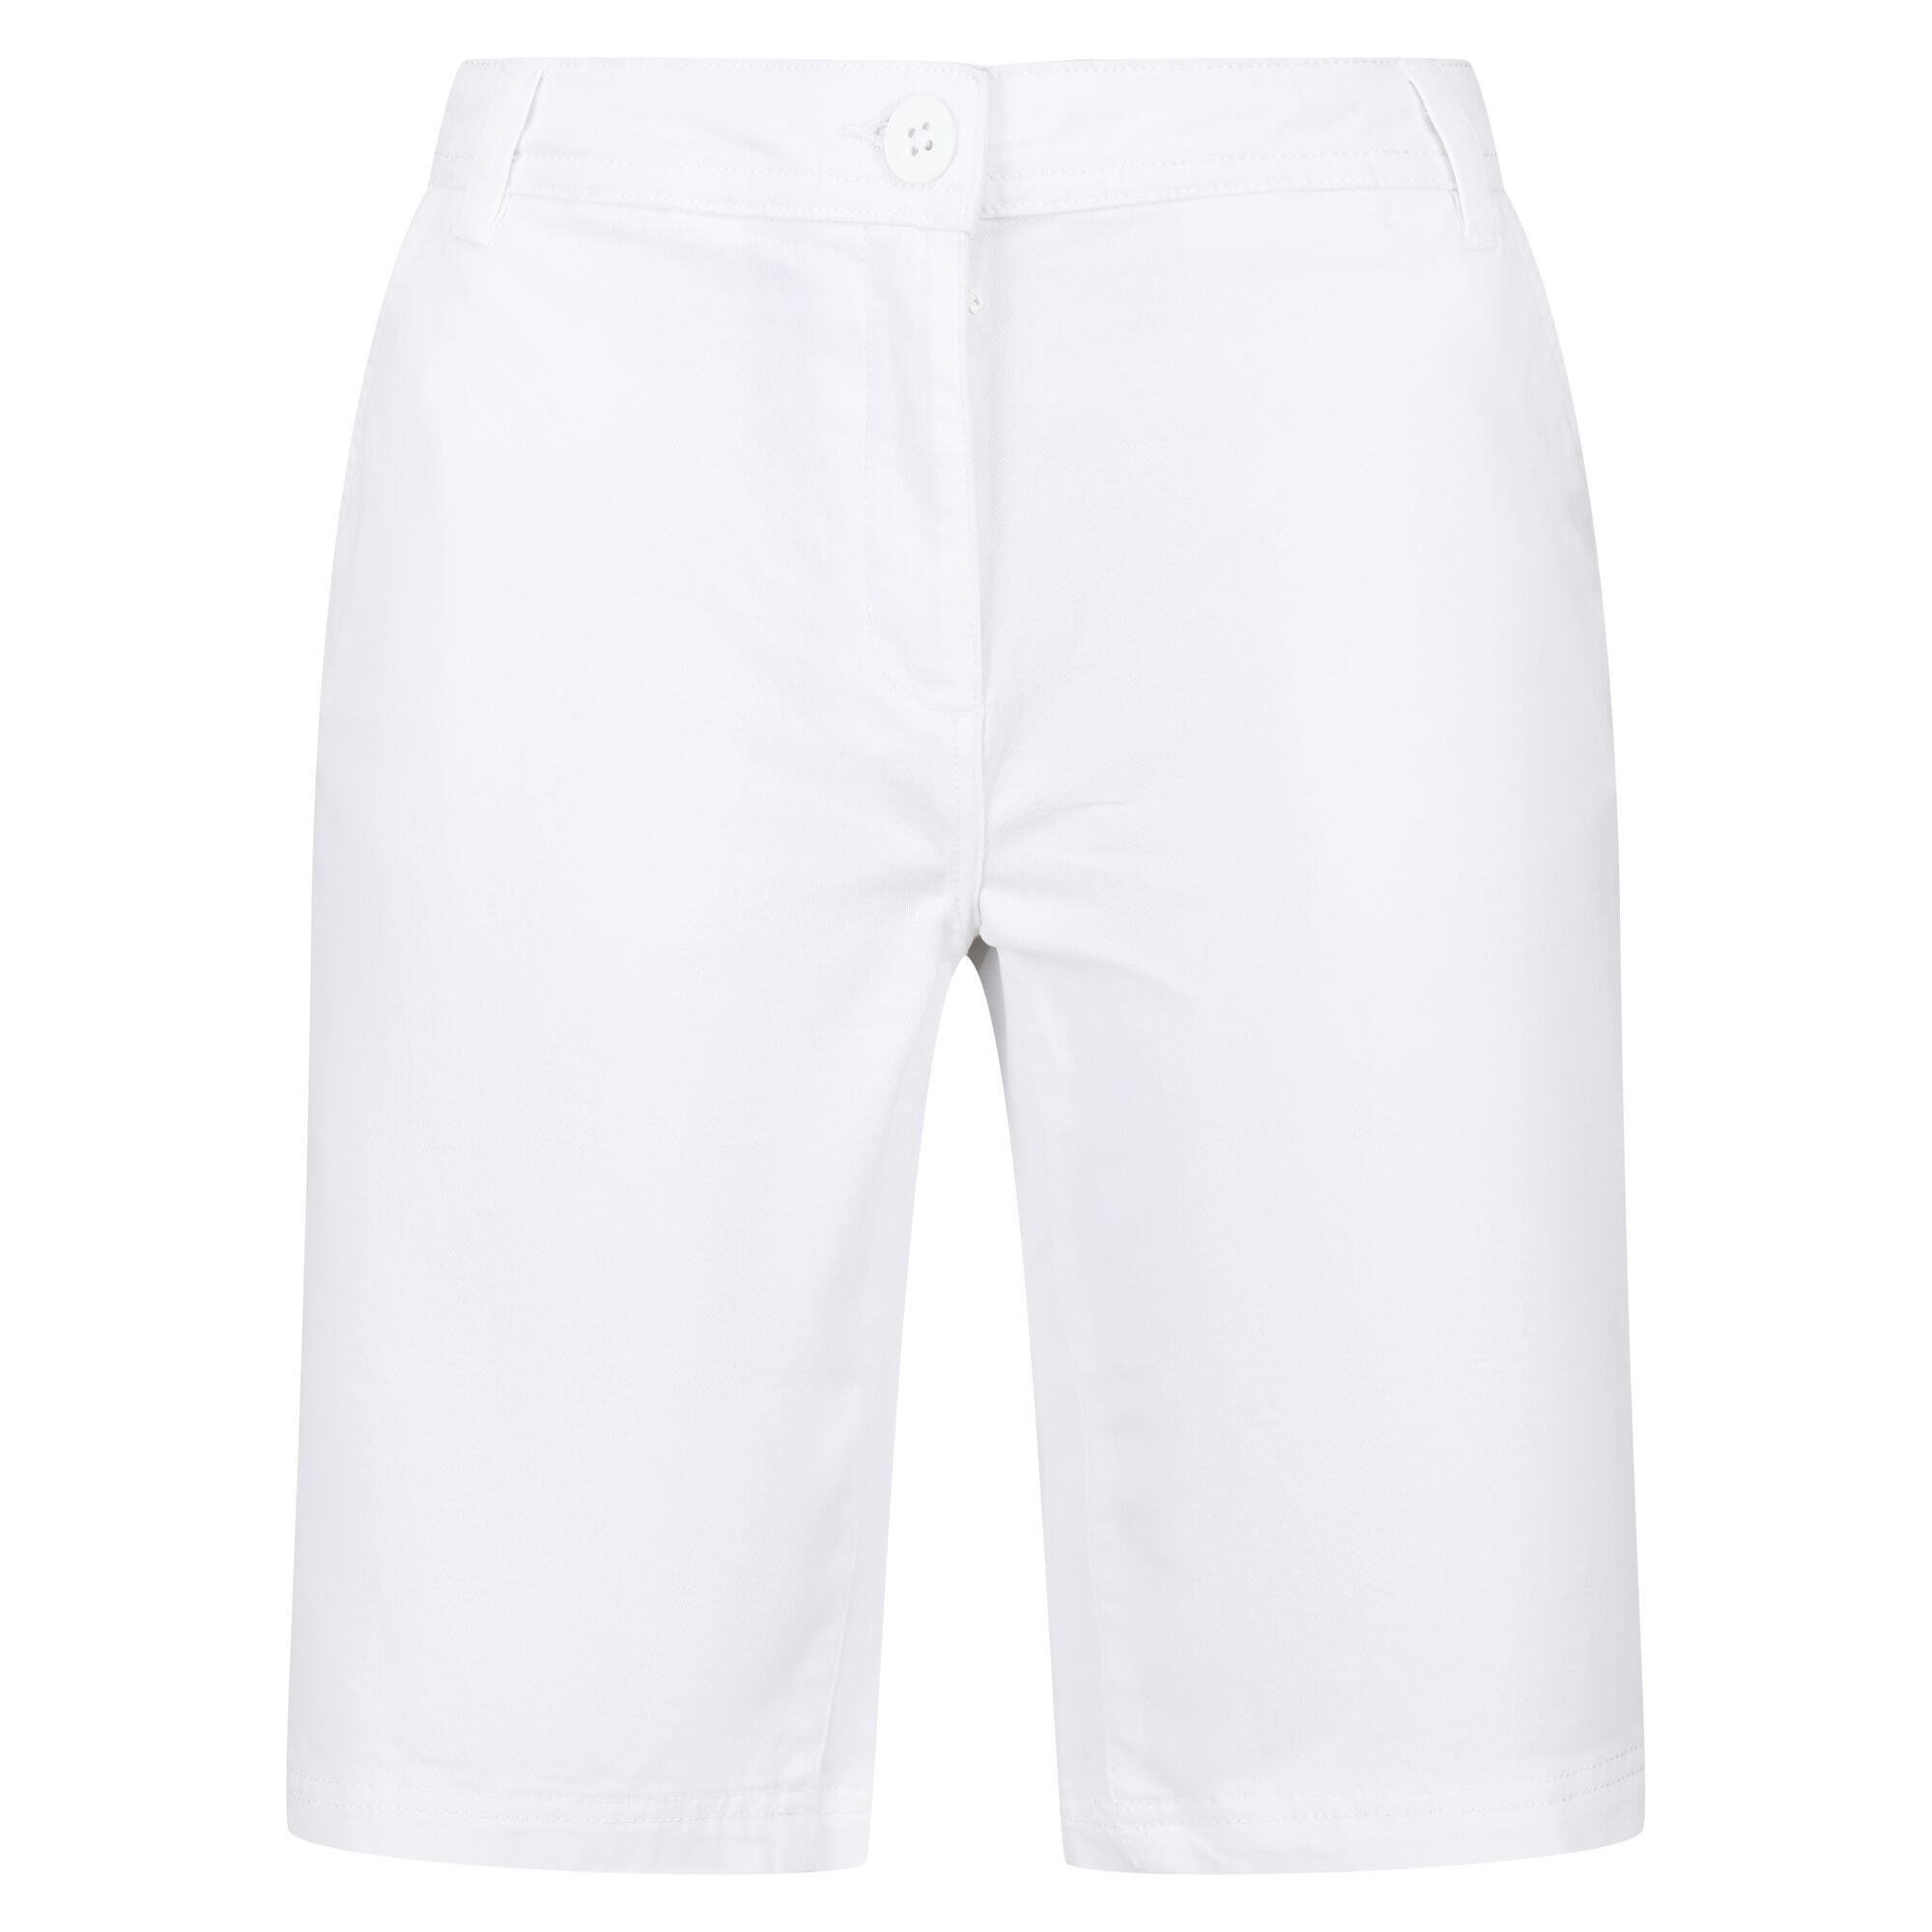 REGATTA Womens/Ladies Bayla Casual Shorts (White)